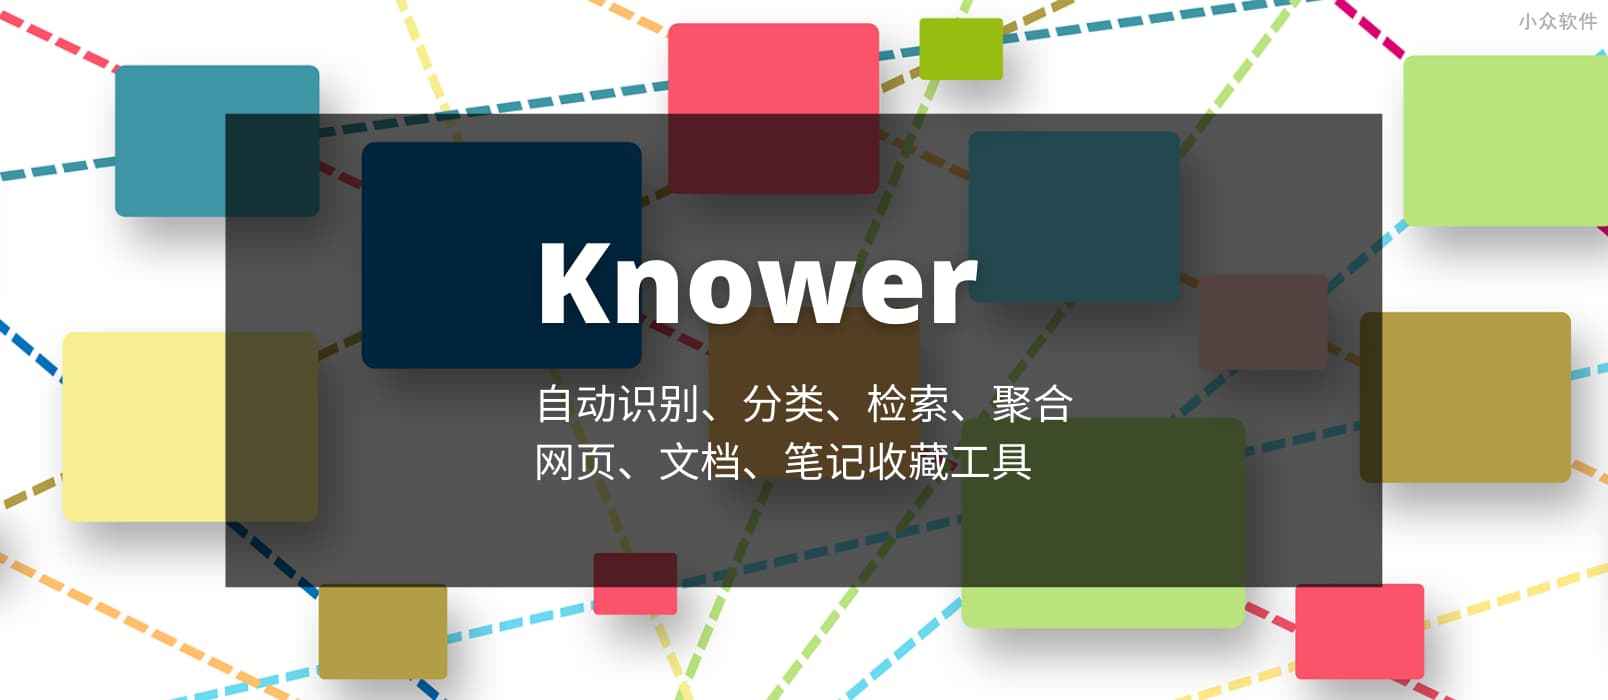 Knower - 能自动识别、分类、检索、聚合的网页/文档收藏工具